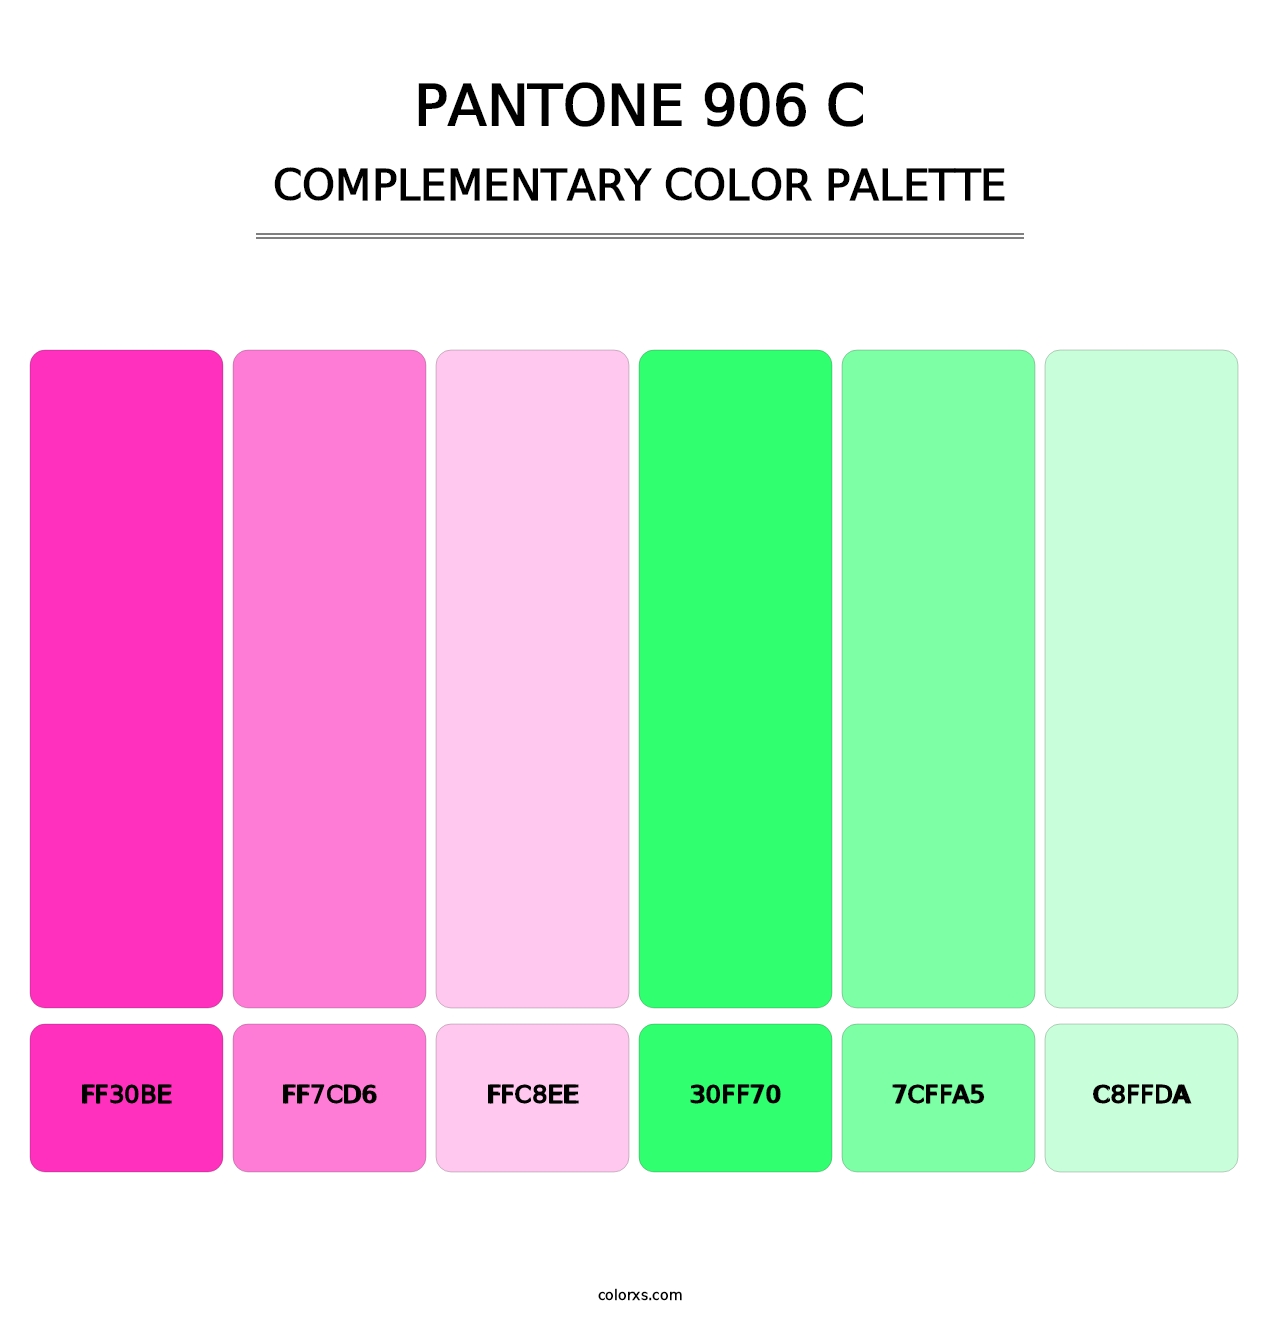 PANTONE 906 C - Complementary Color Palette